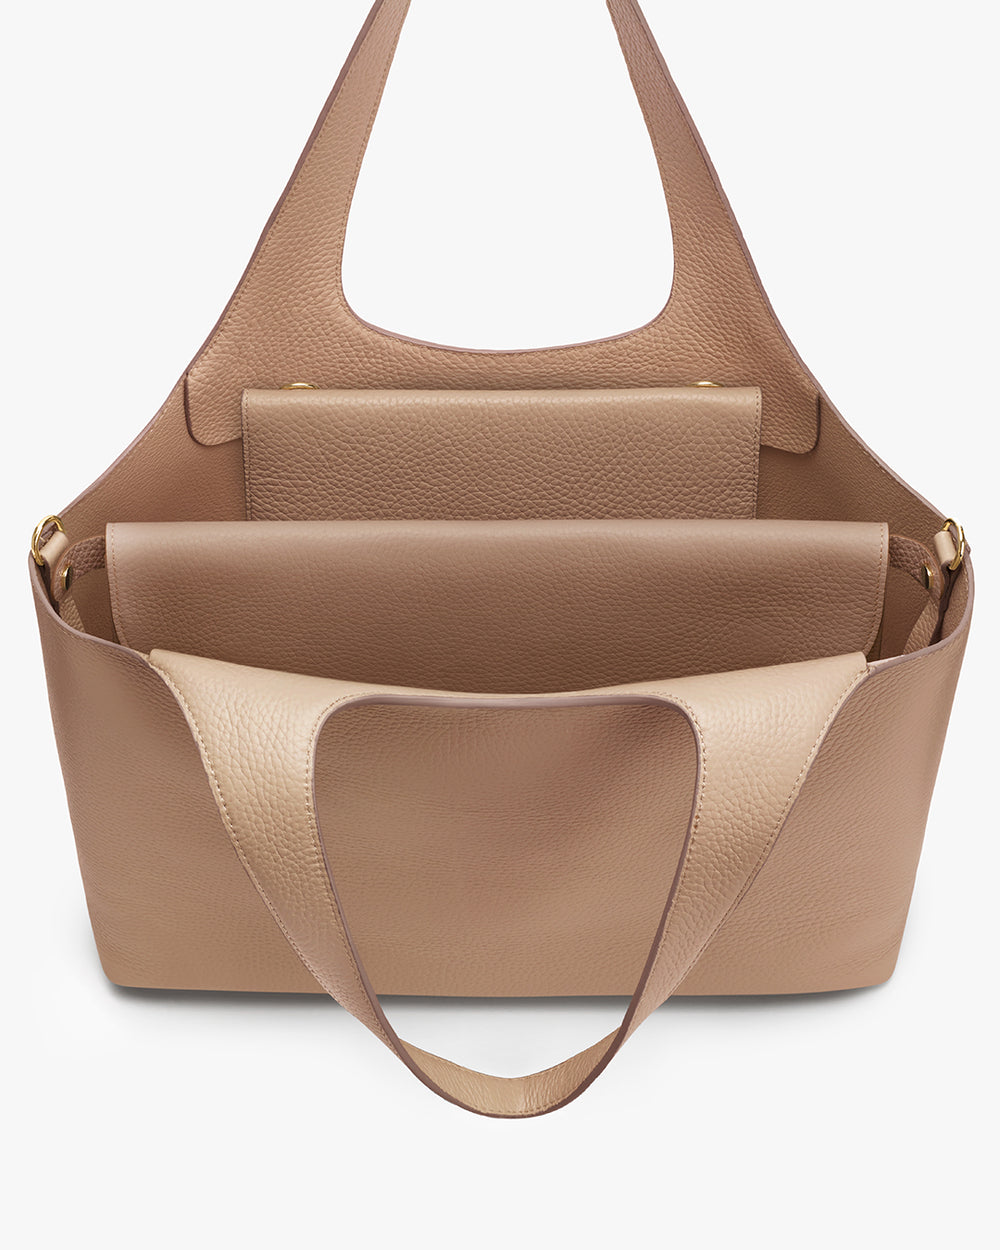 Handbag with a front pocket and a thin strap.